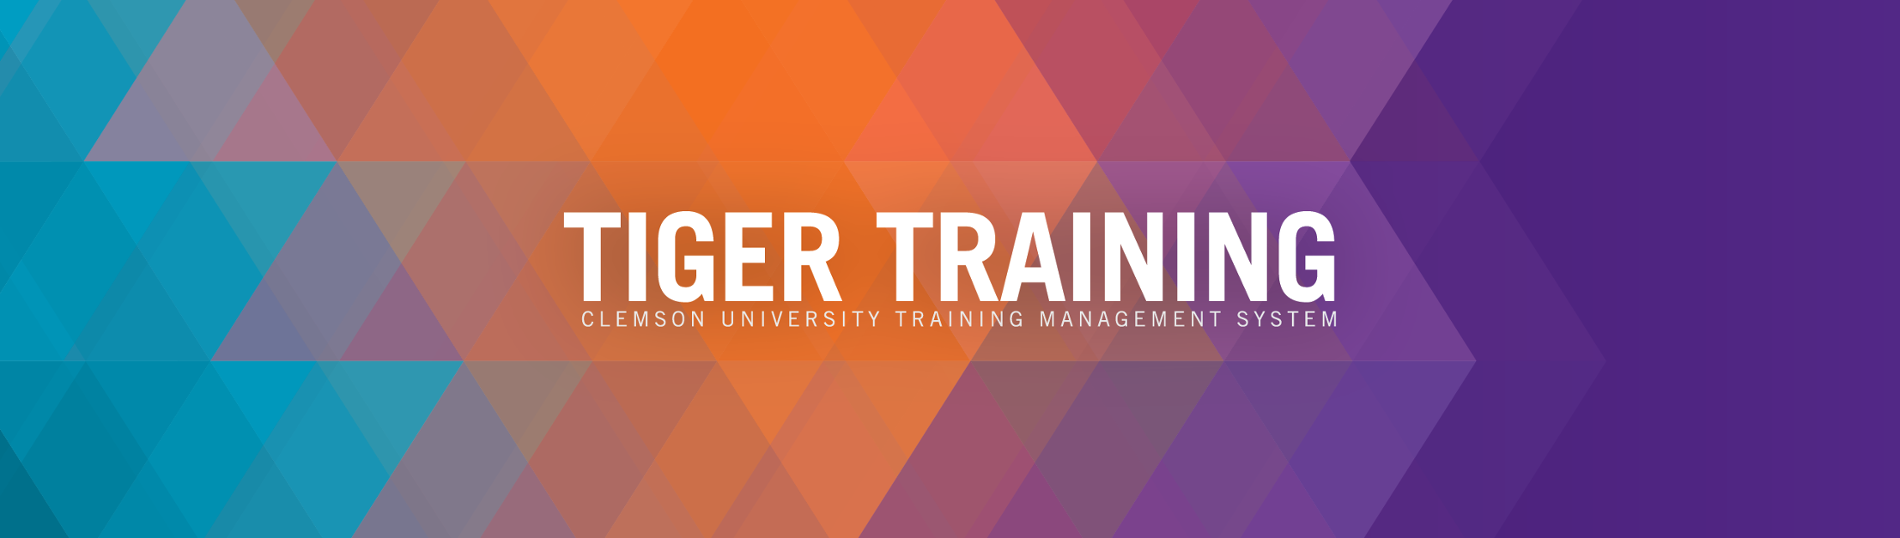 Tiger Training Banner